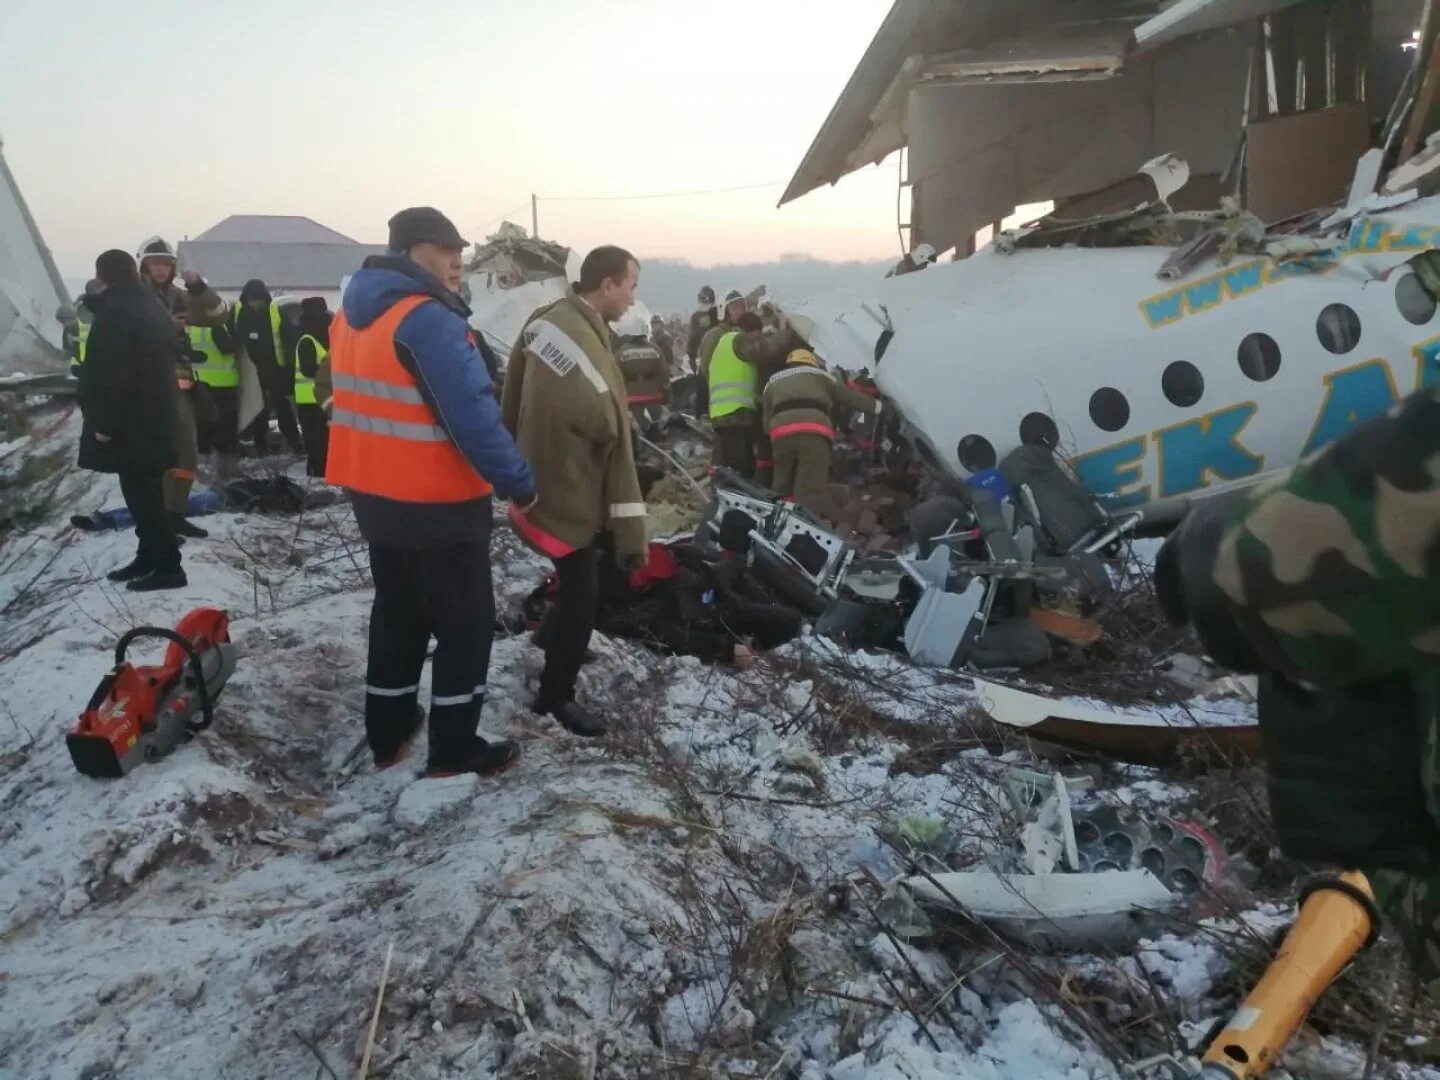 Падение самолета люди. Fokker 100 bek Air катастрофа. Авиакатастрофа в Алма Ате 2019. Крушение а320 в Сочи. Бек Эйр катастрофа 27 декабря.